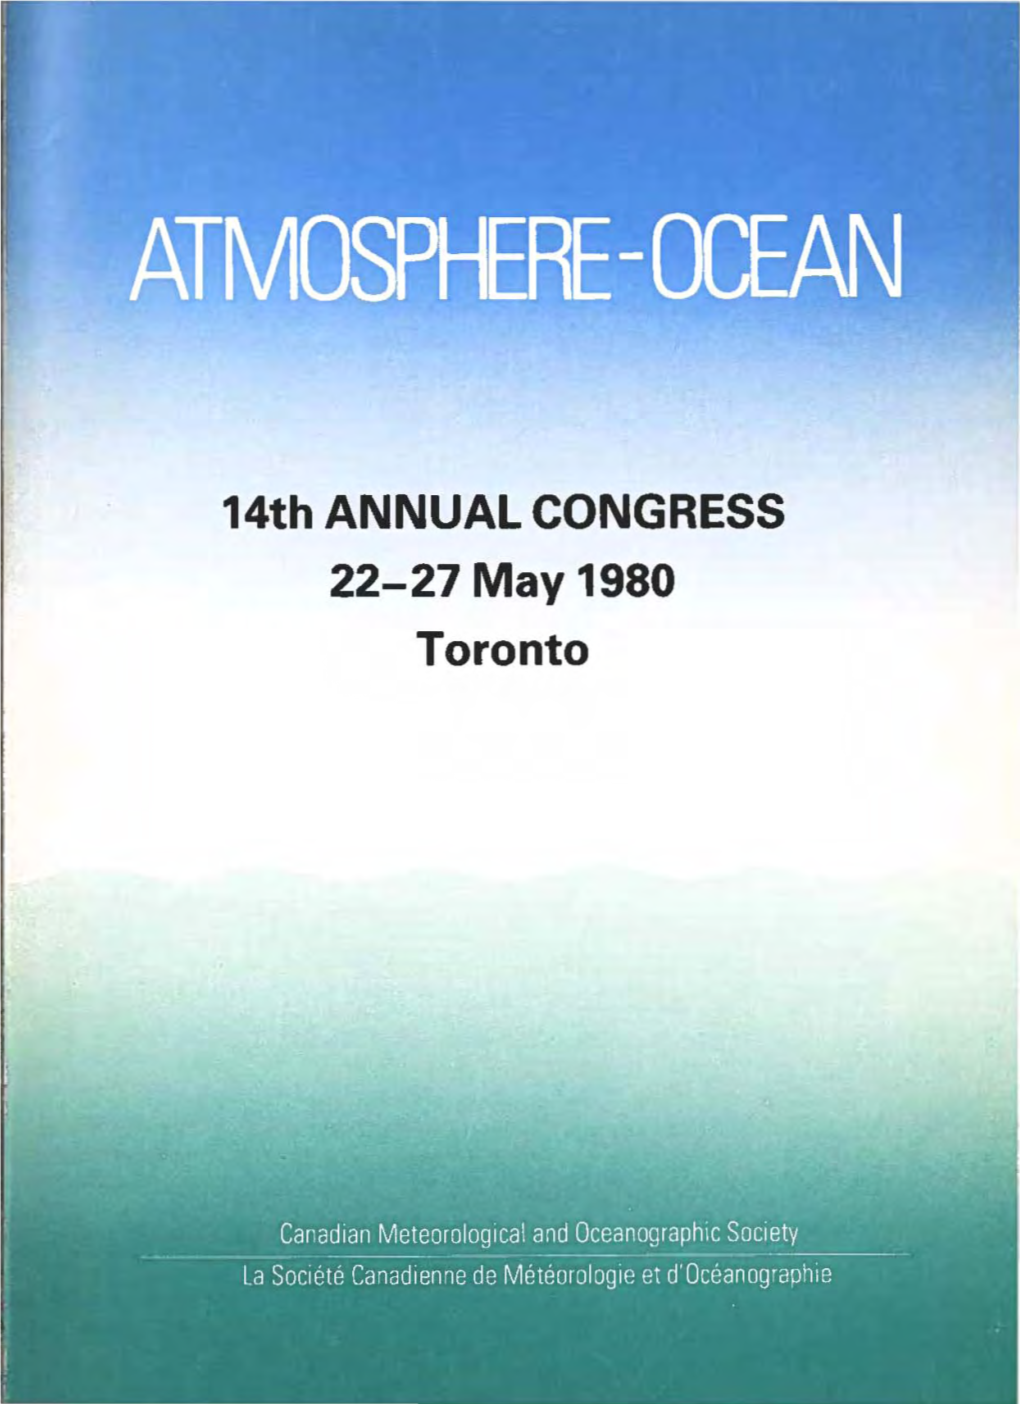 ATMOSPHERE-OCEAN 1980 Congress Issue